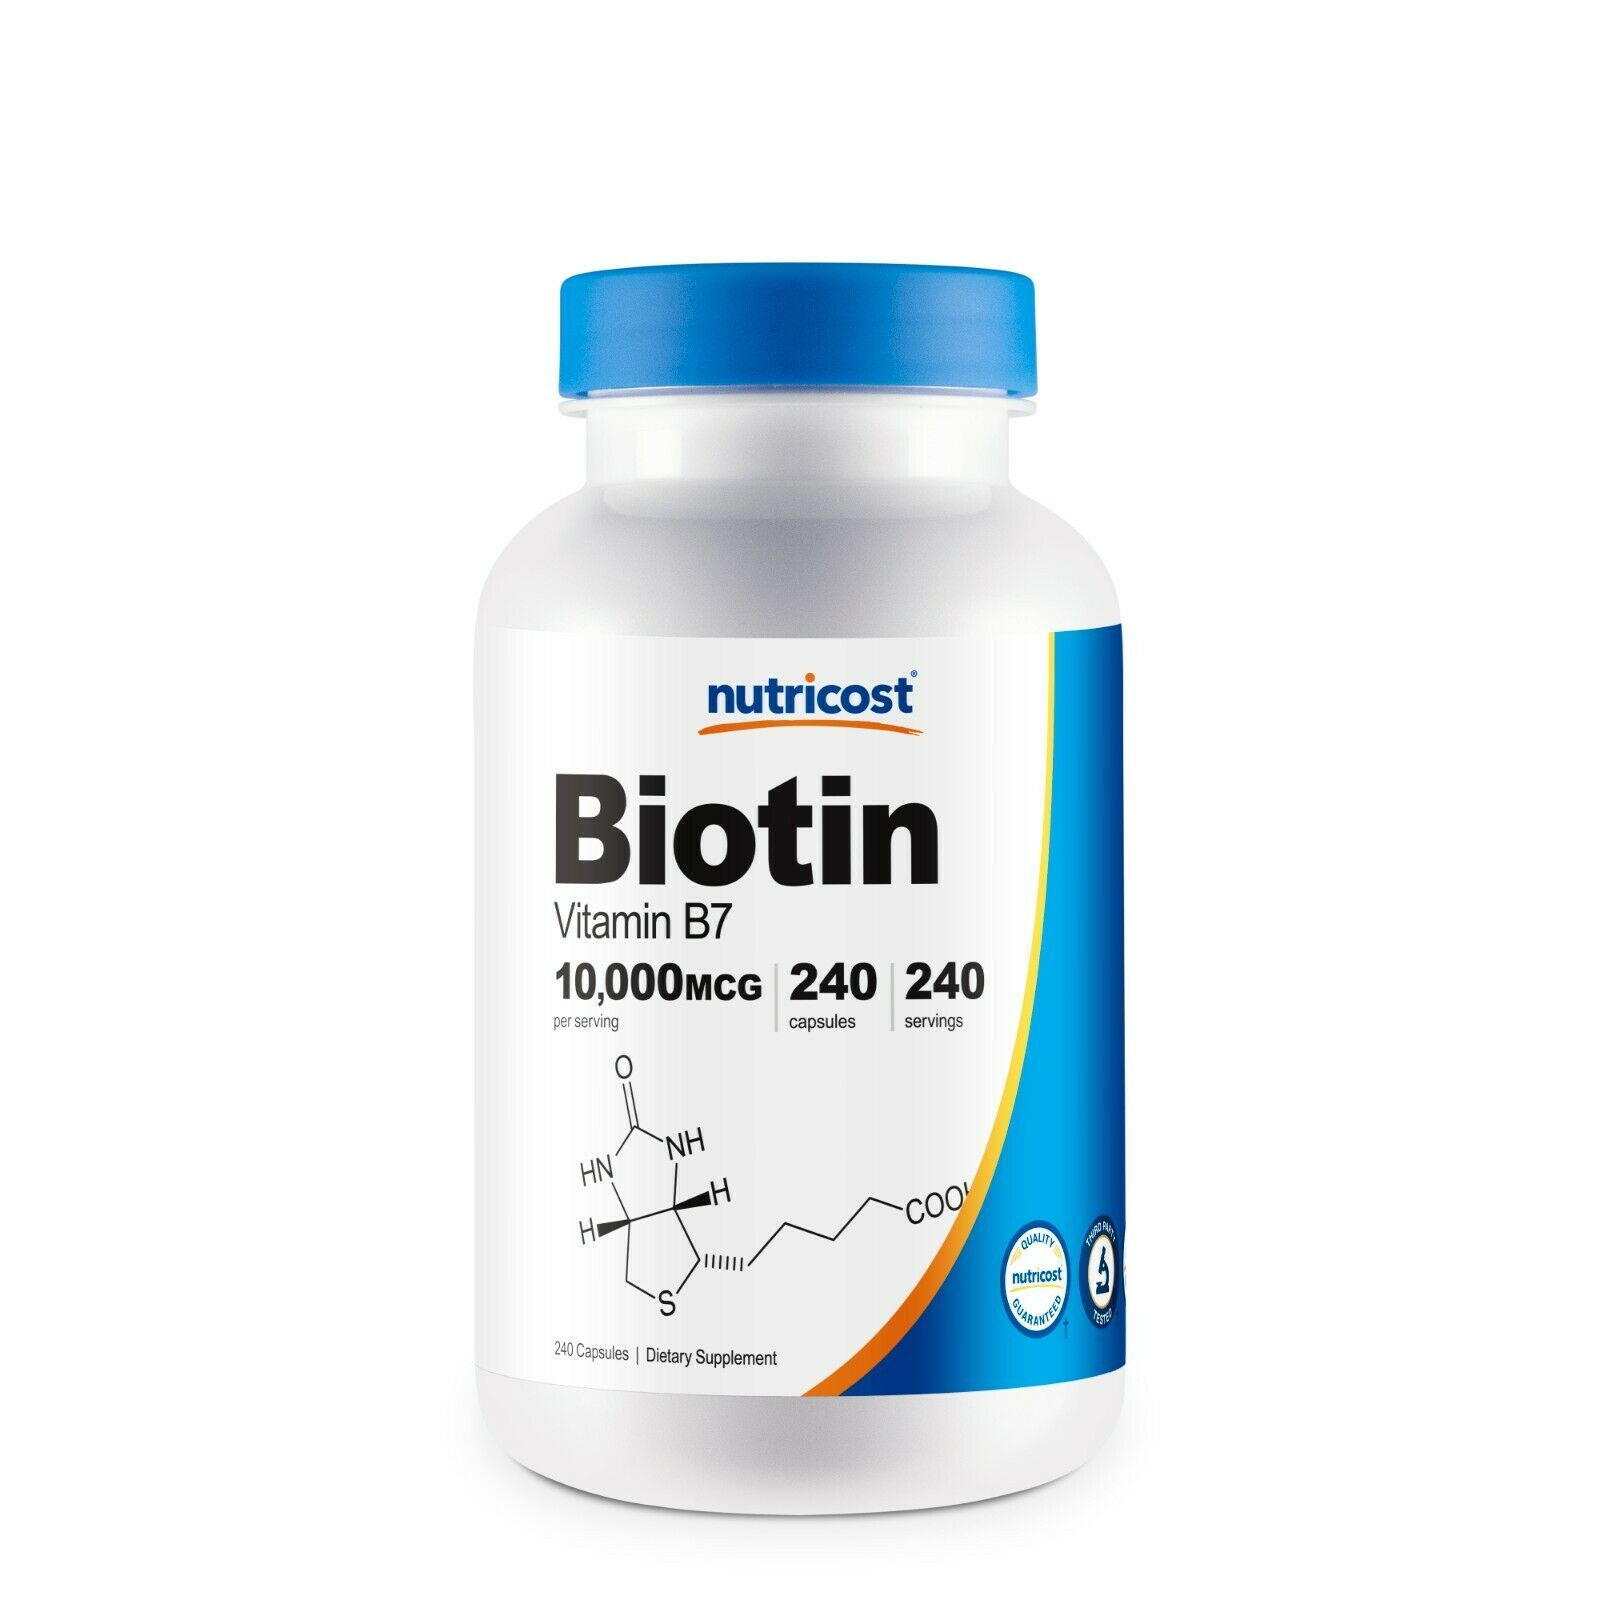 Nutricost Biotin (vitamin B7) 10,000mcg (10mg), 240 Capsules